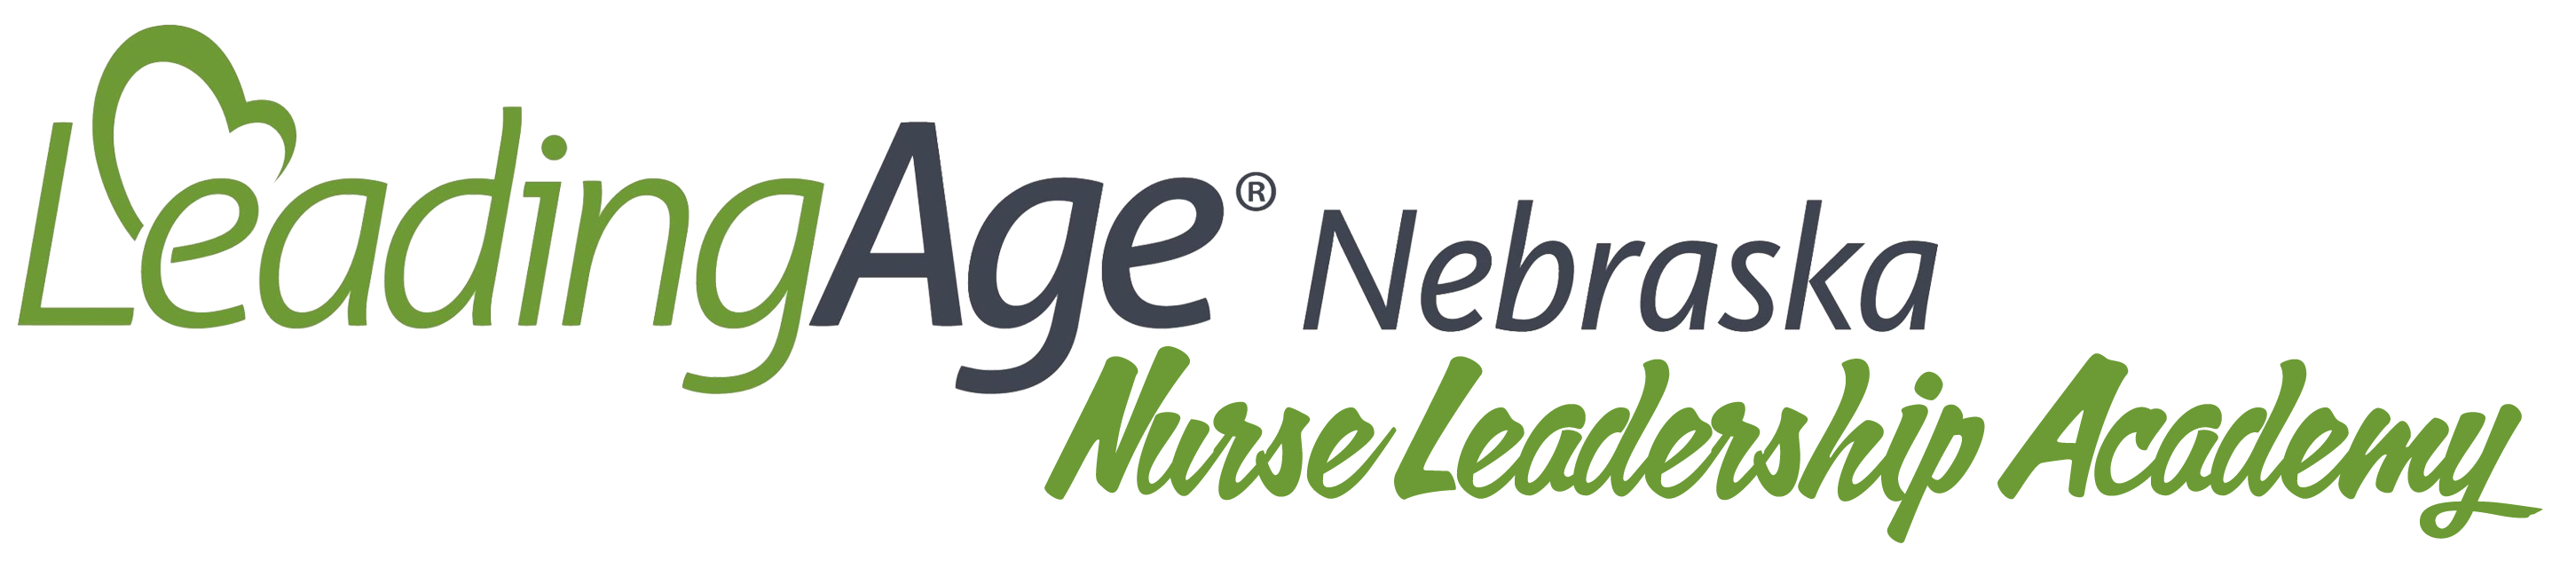 Nurse Leadership Academy logo